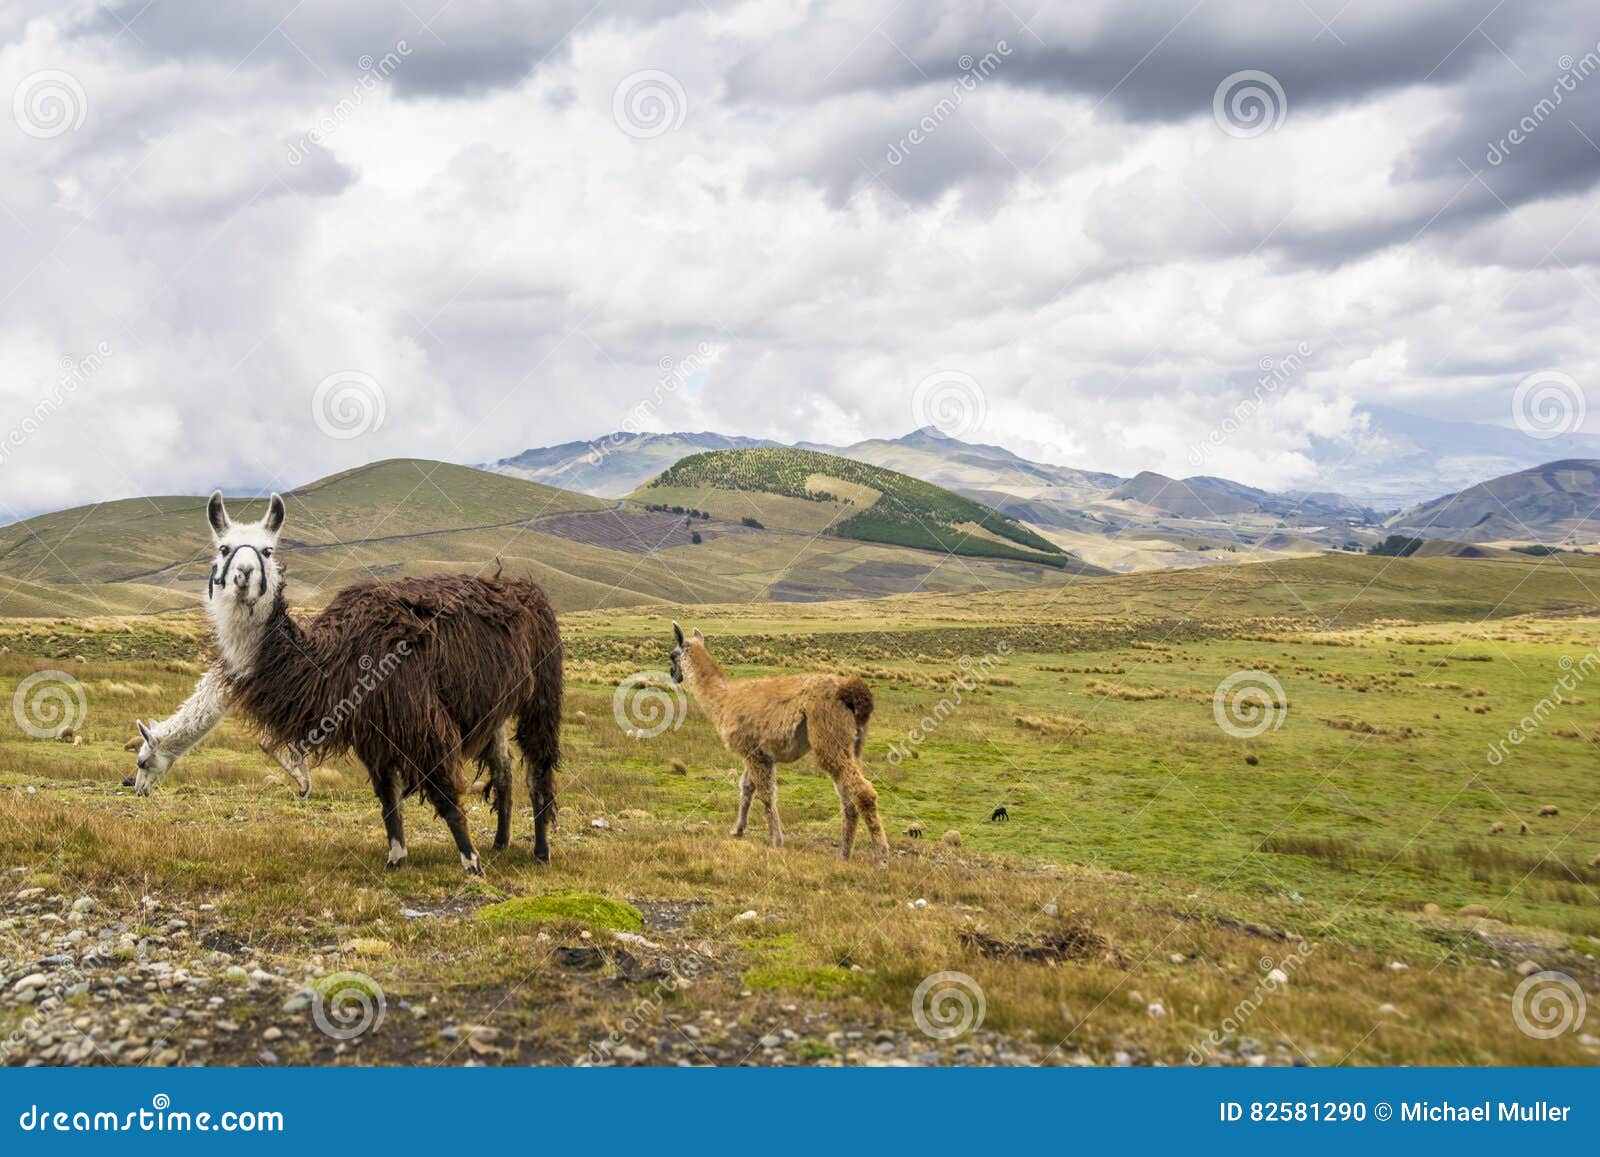 brown lamas eating grass